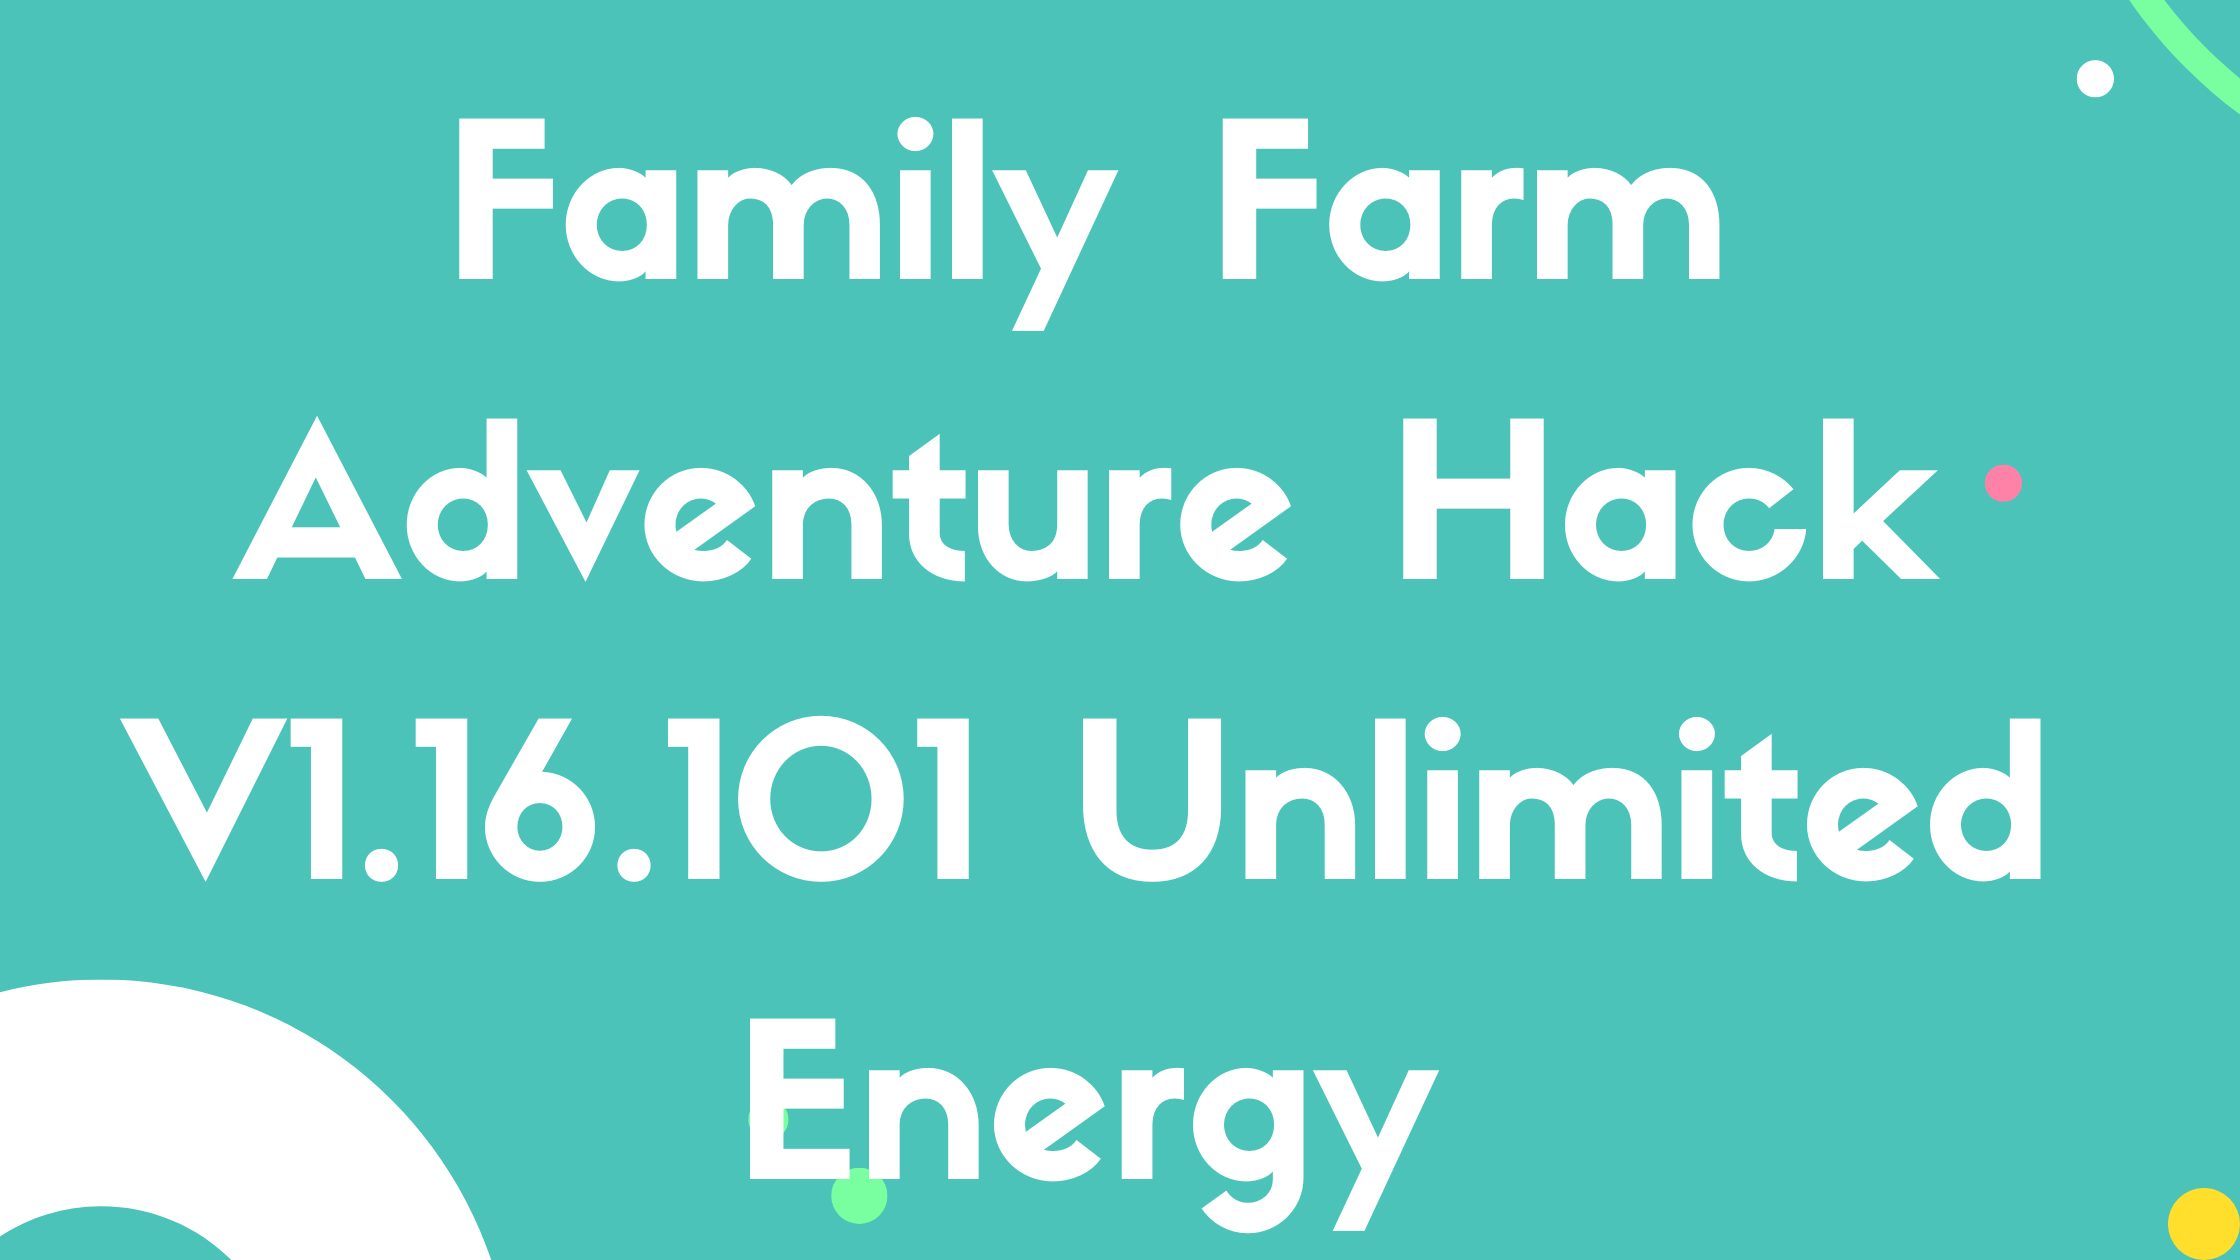 Family Farm Adventure Hack V1.16.101 Unlimited Energy